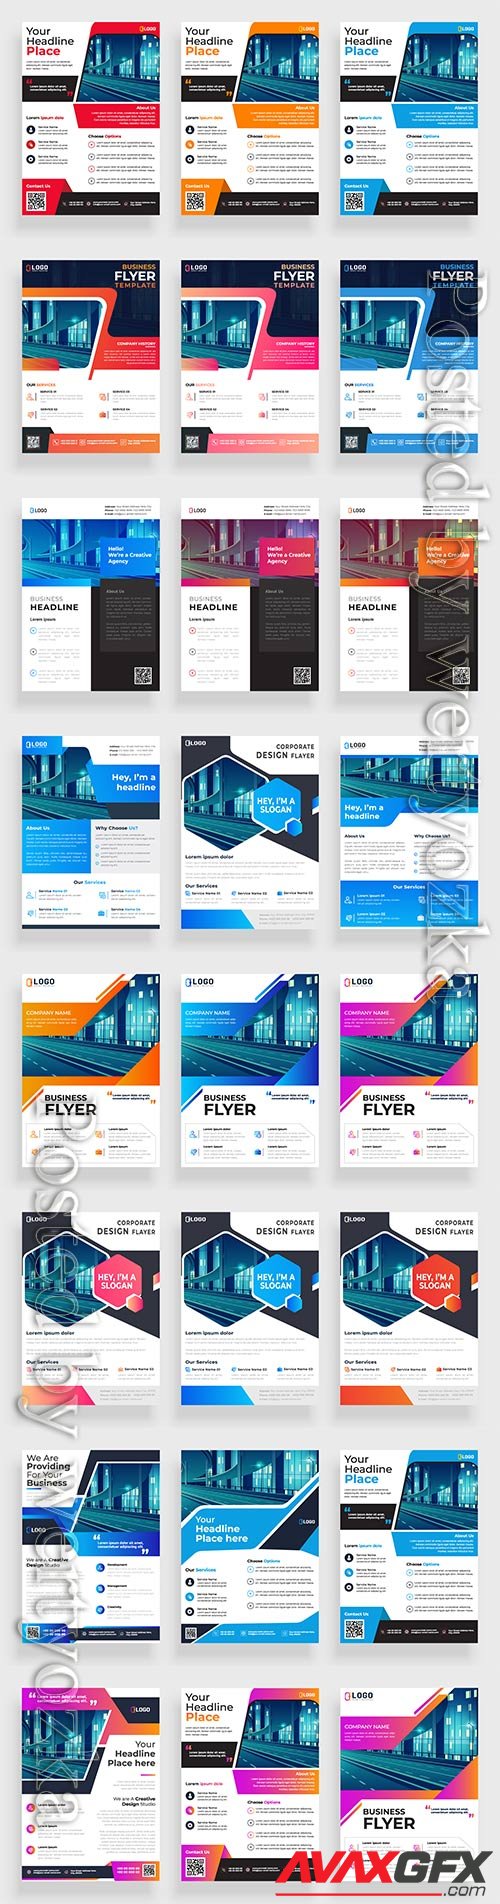 Business flyer template design, brochure vector illustration # 9